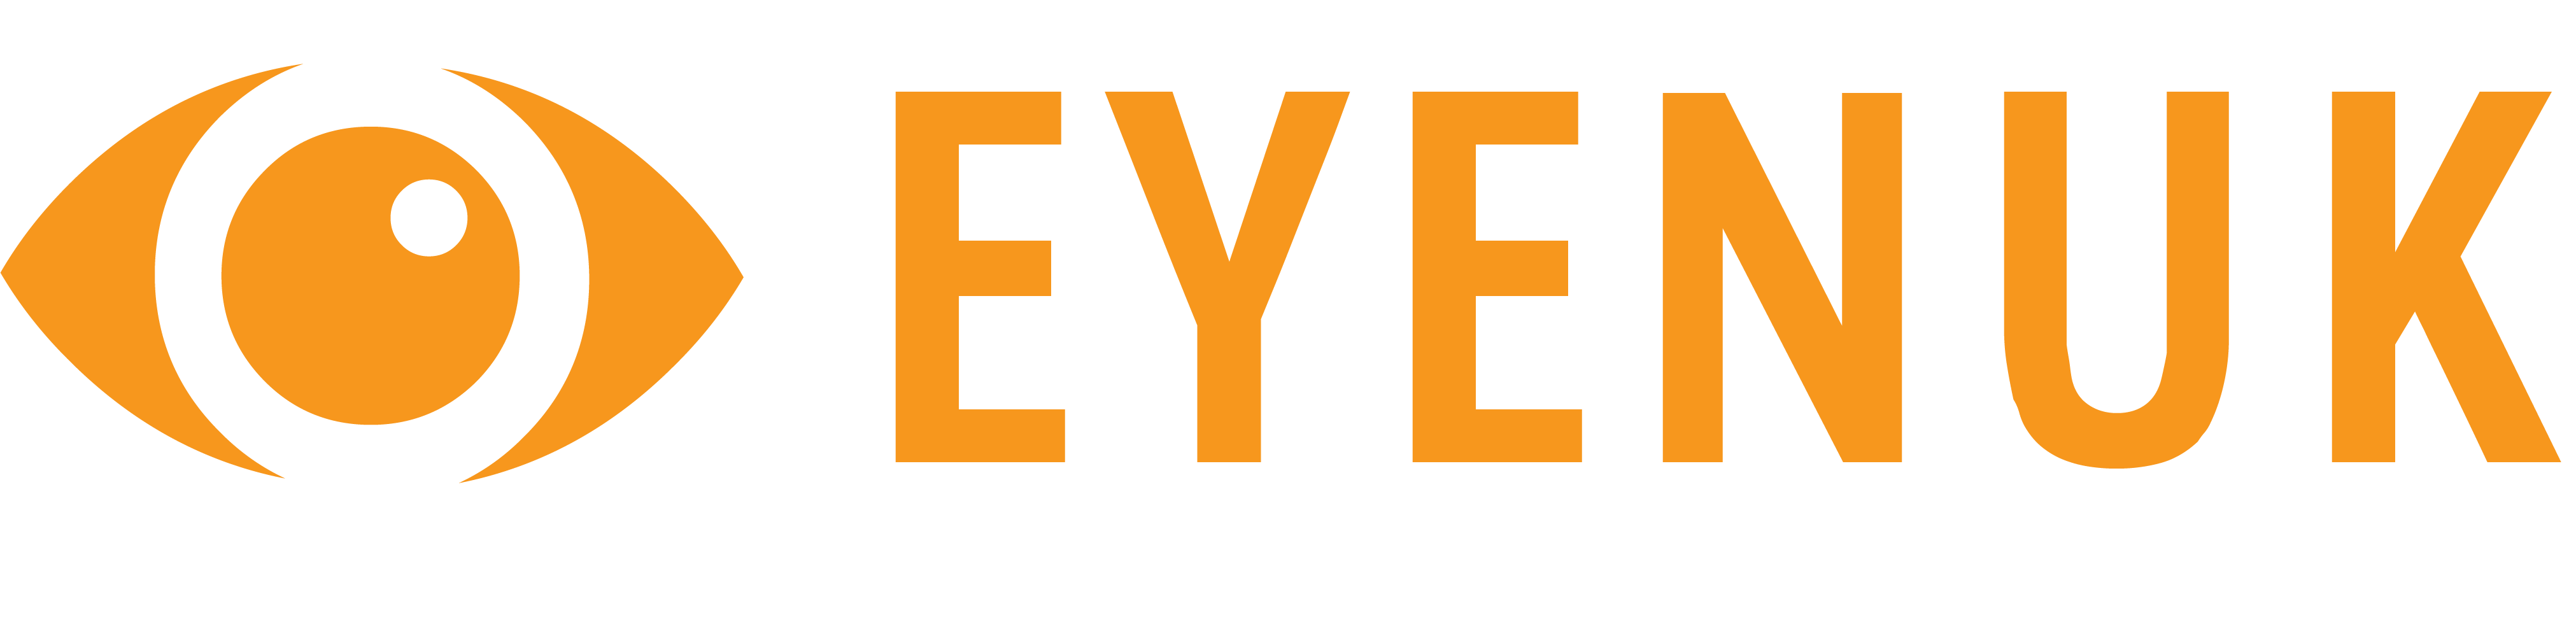 eyenuk_logo_redesign_2017_onecolor.png